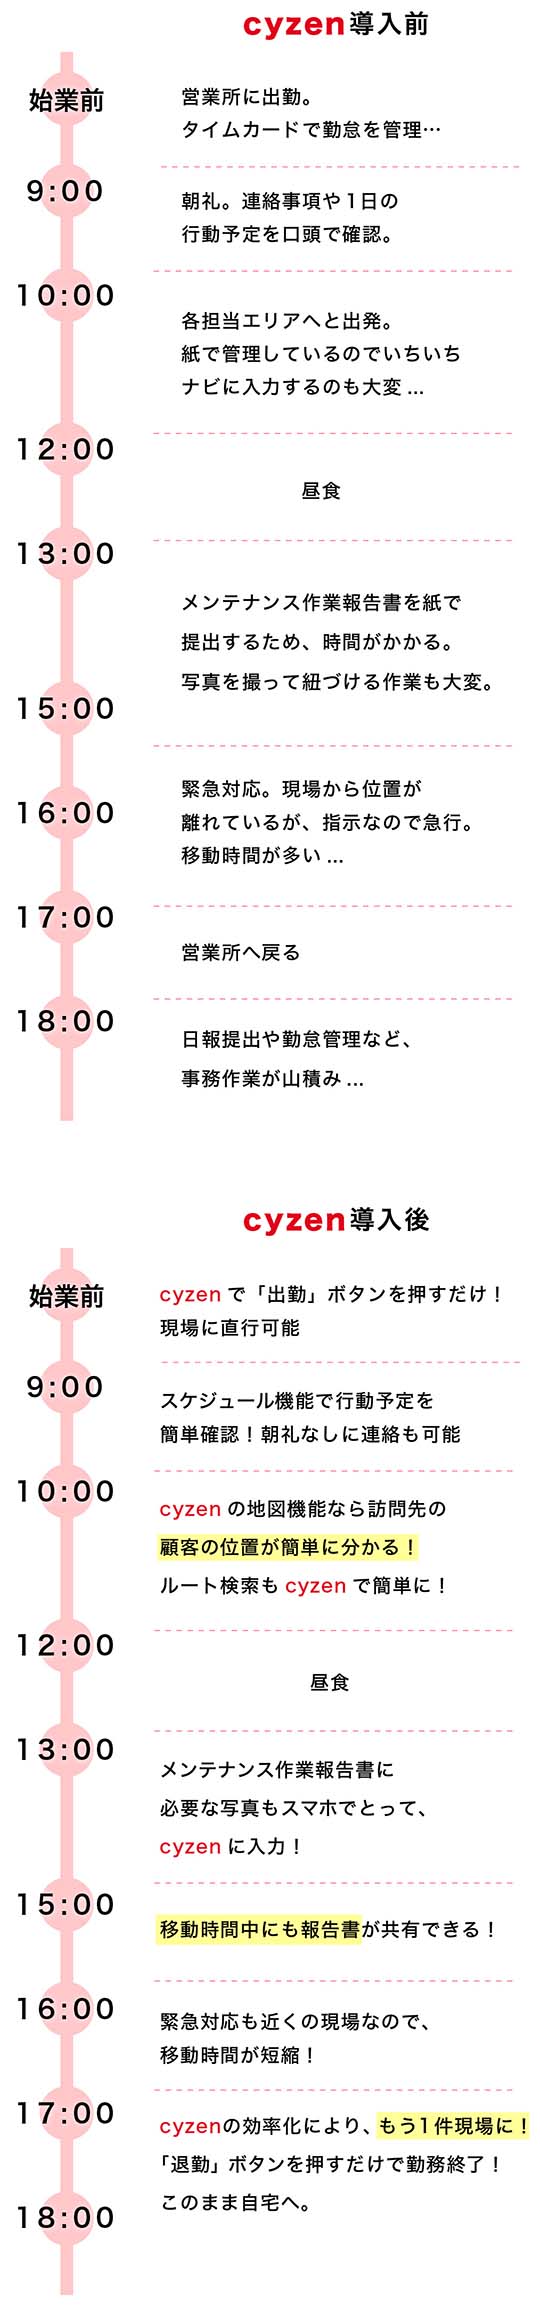 cyzen導入時業務比較表